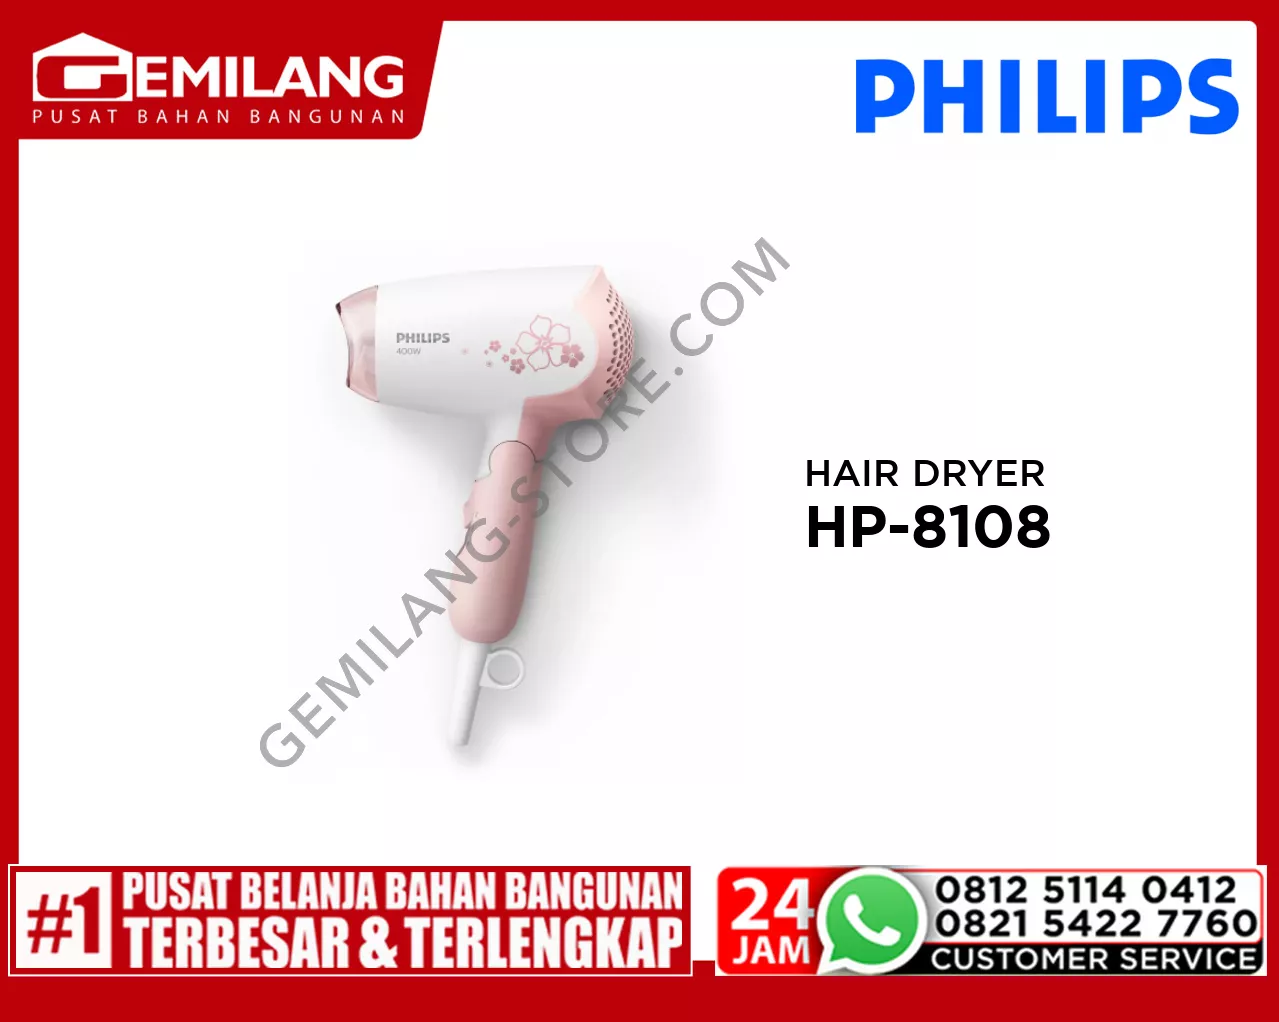 PHILIPS HAIR DRYER HP-8108